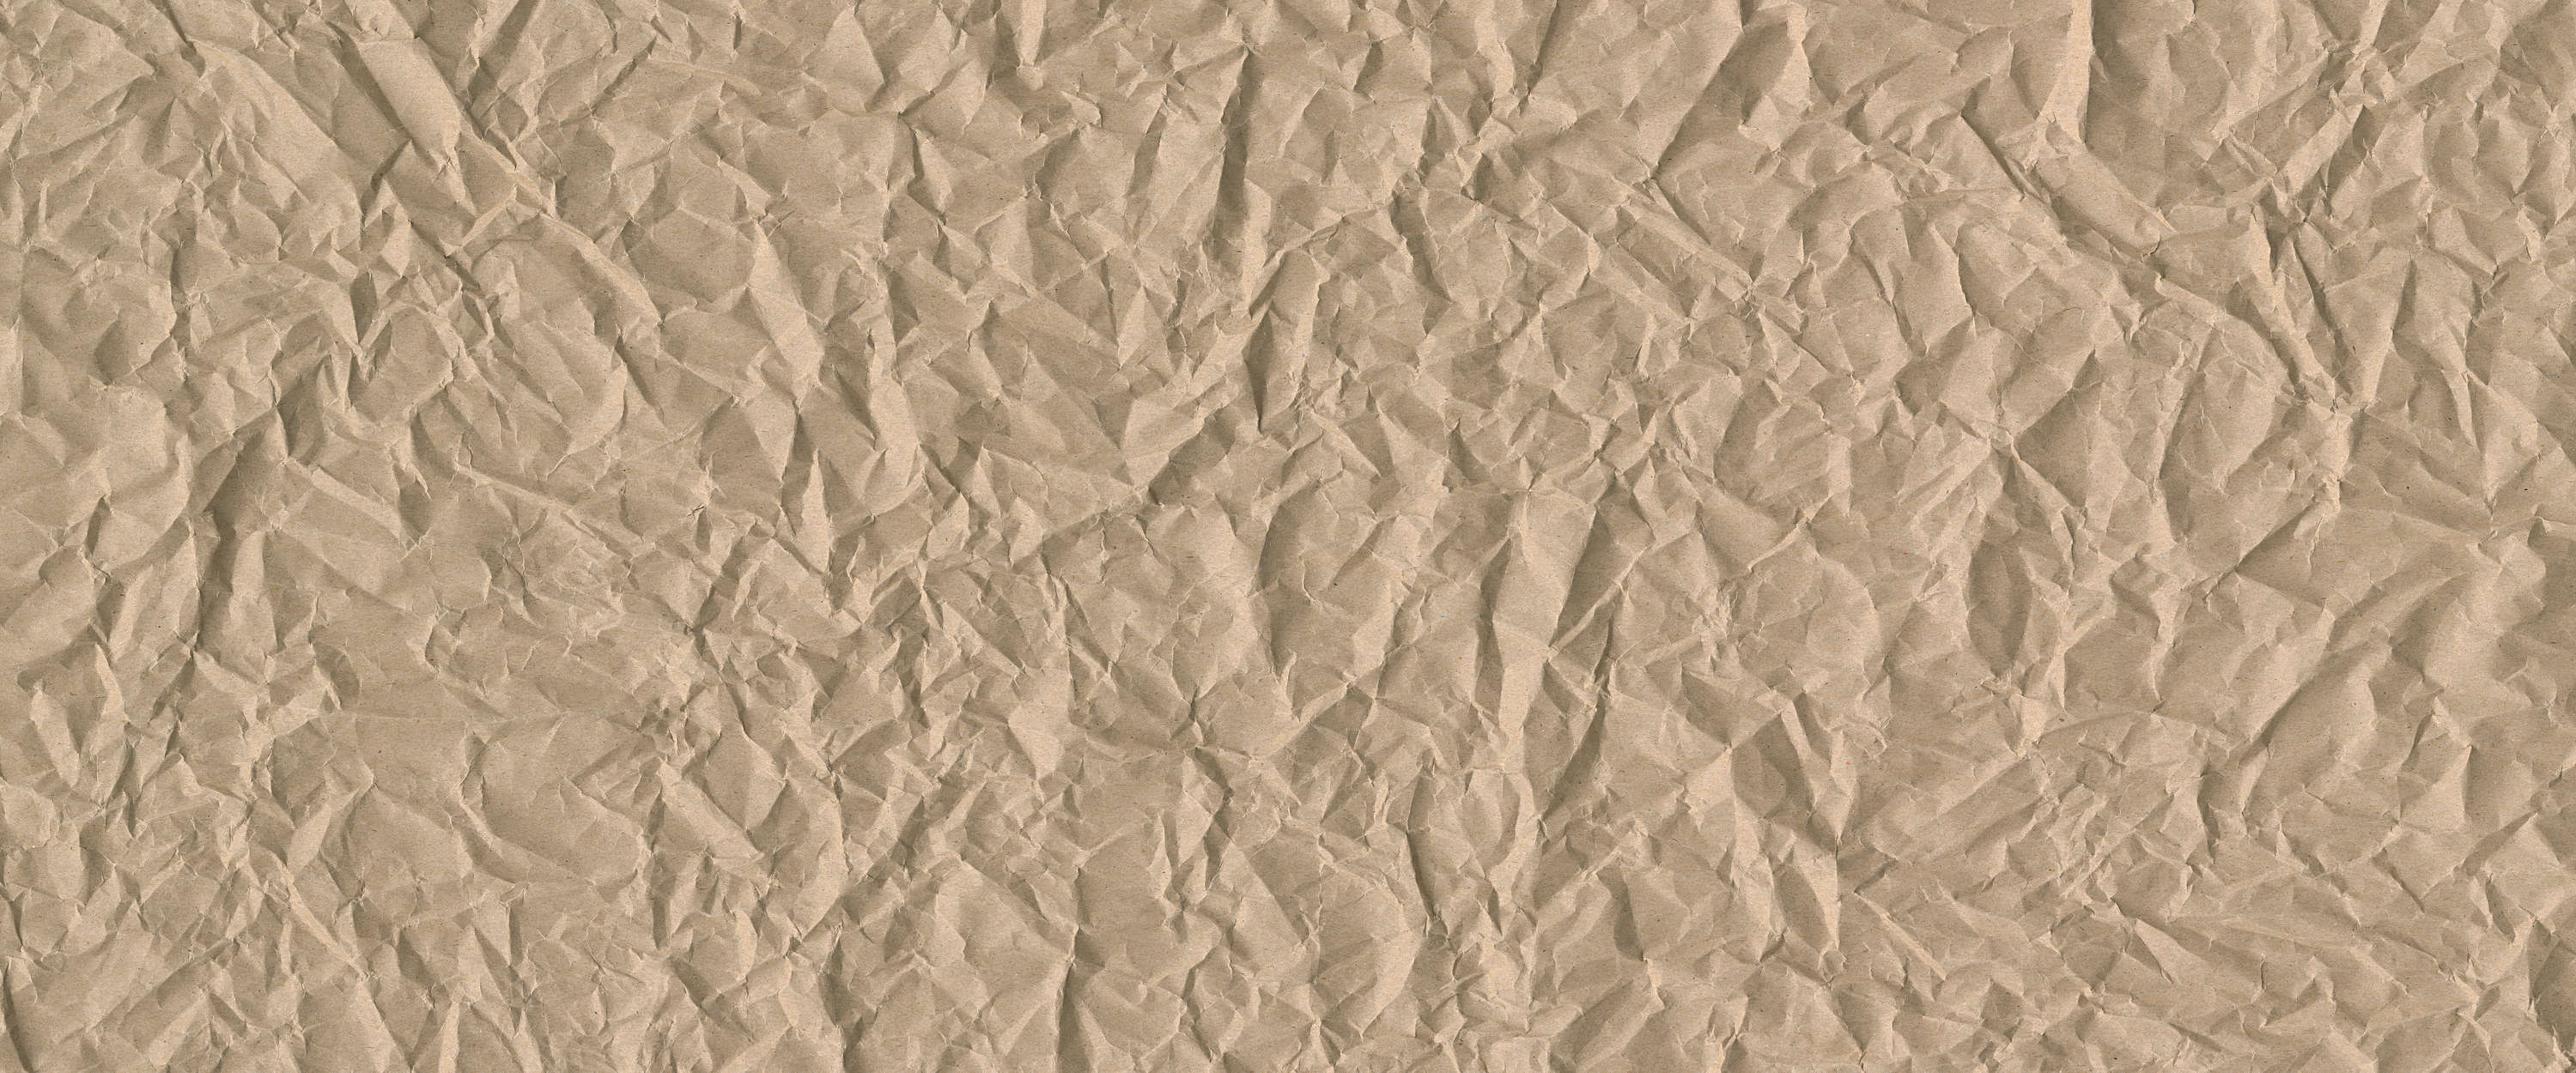             Muurschildering met spannend oppervlak - Crushed Paper
        